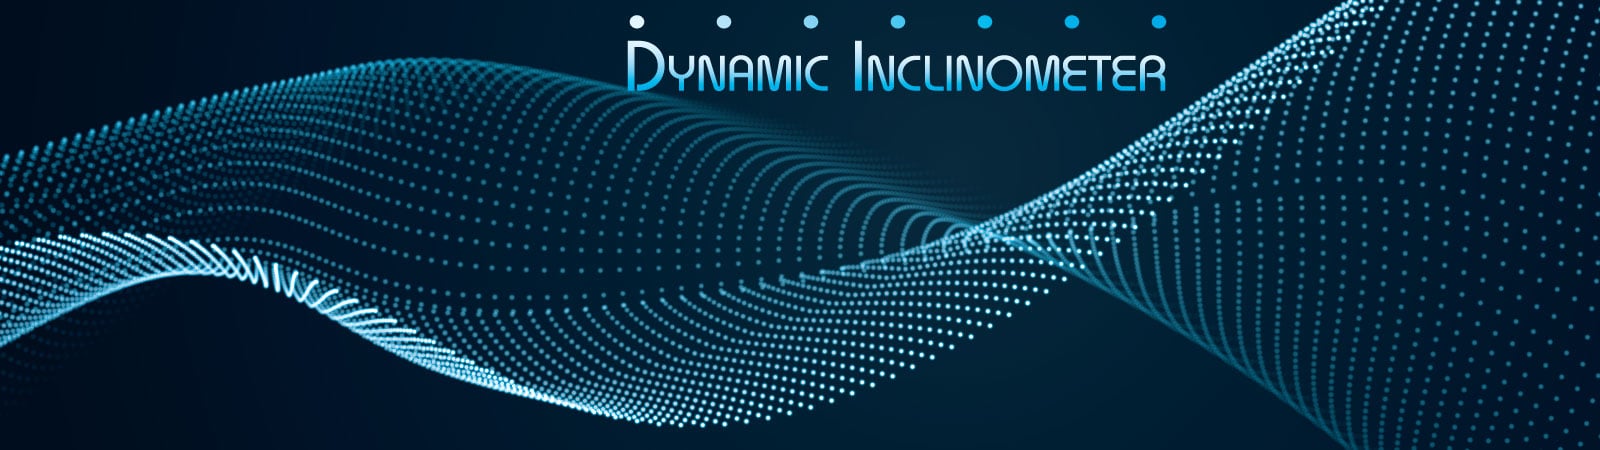 Dynamic Inclinometer